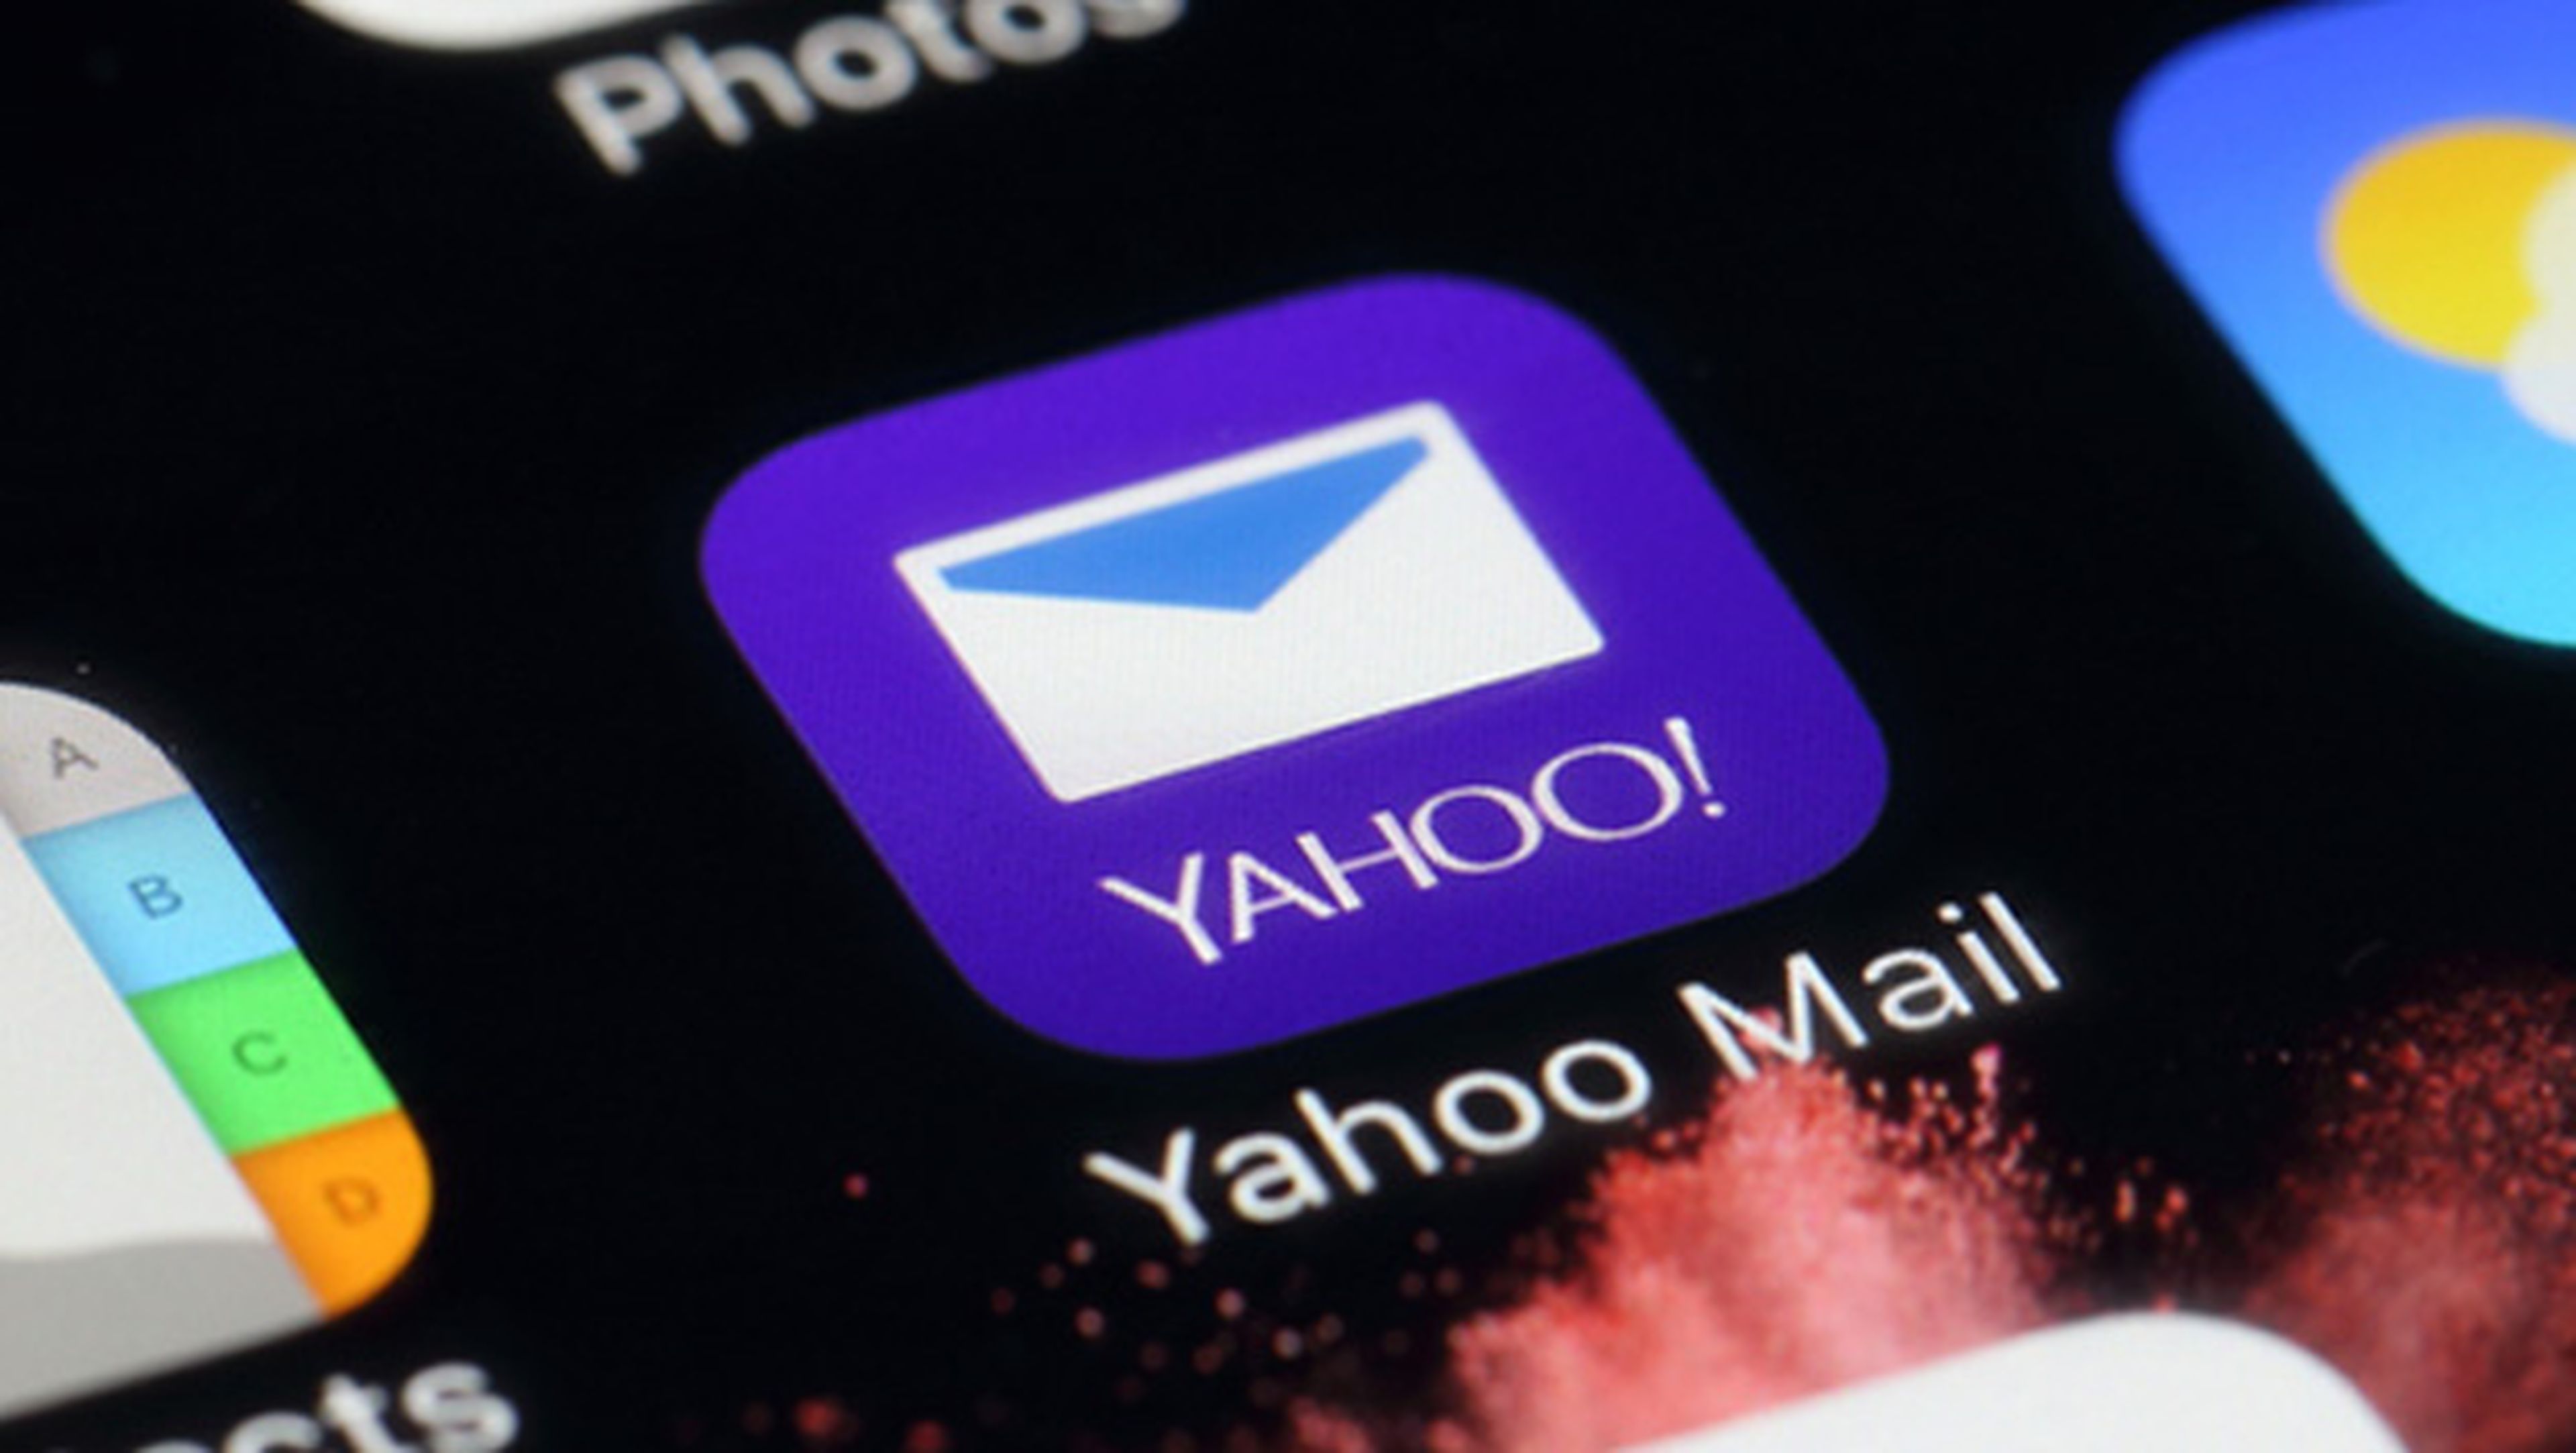 Yahoo Mail app